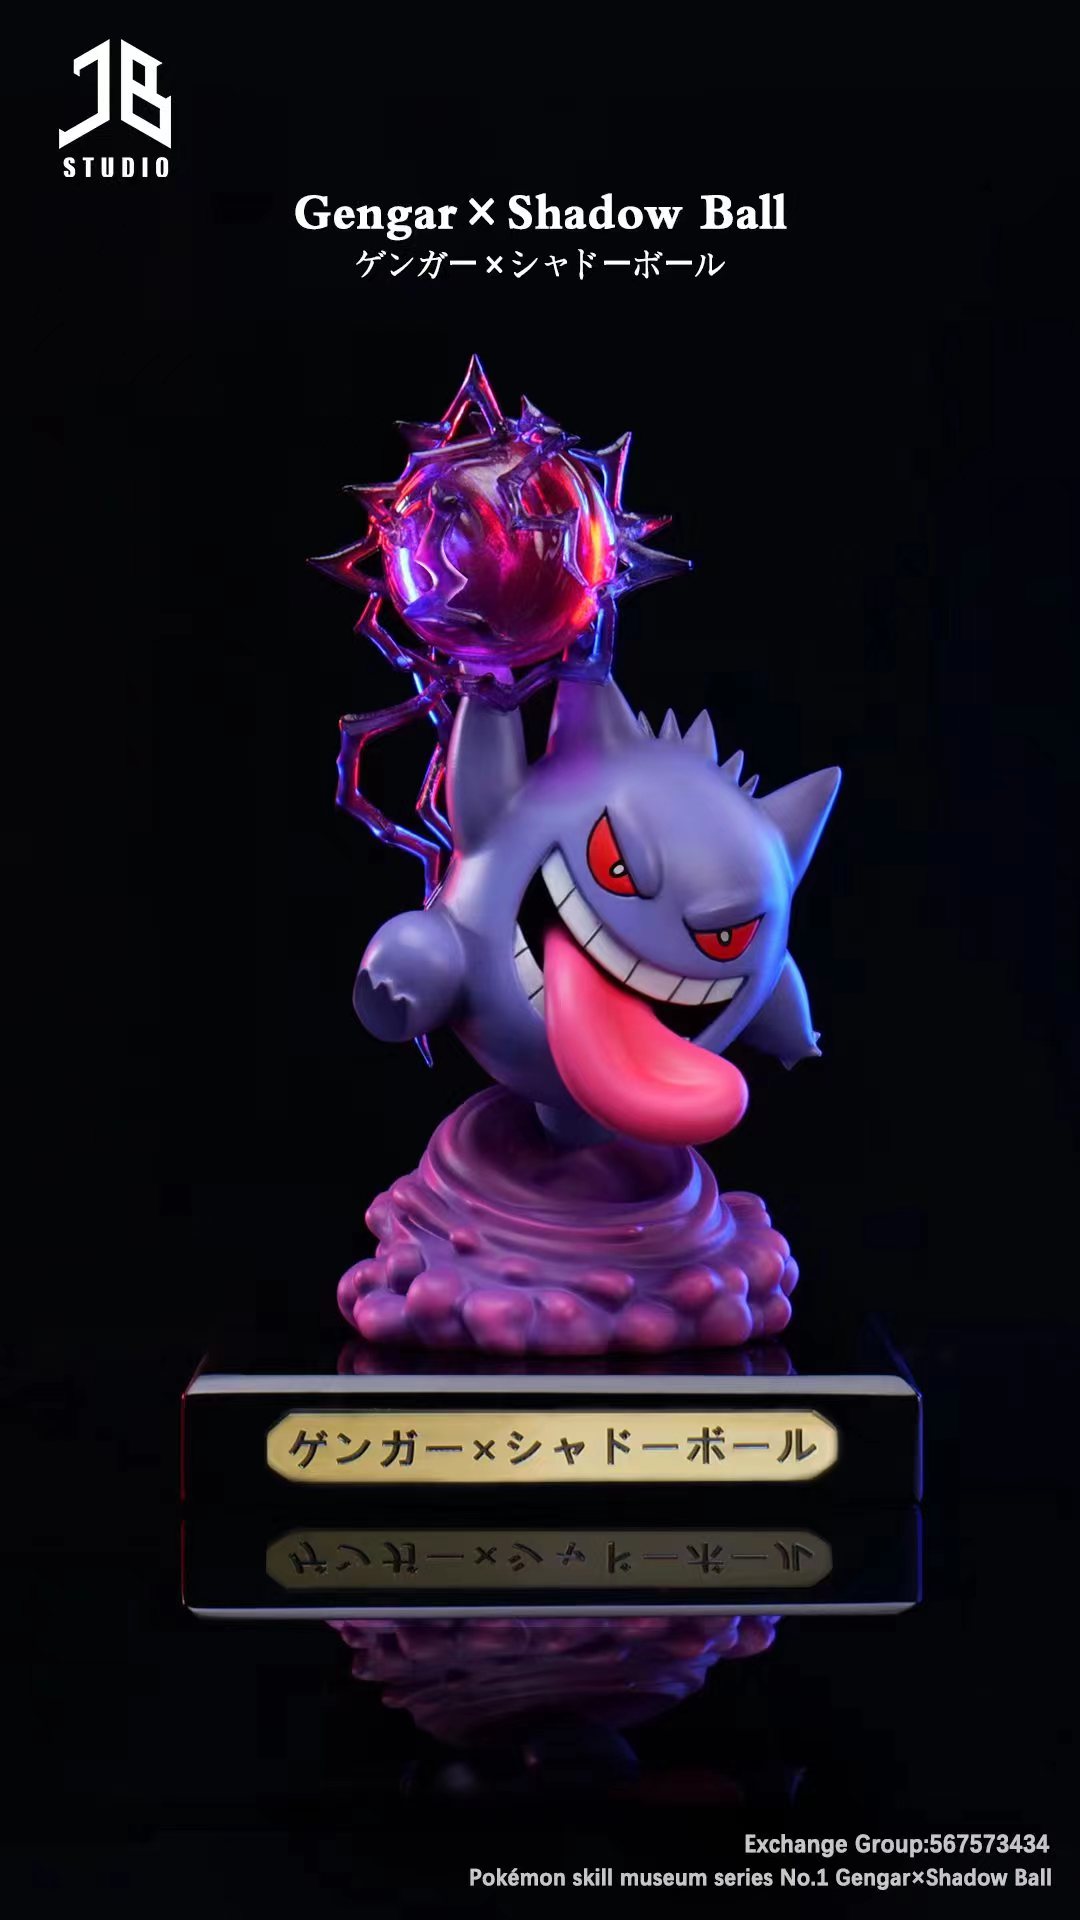 【Preorder】JB Studio Pokemon Gengar Resin Statue